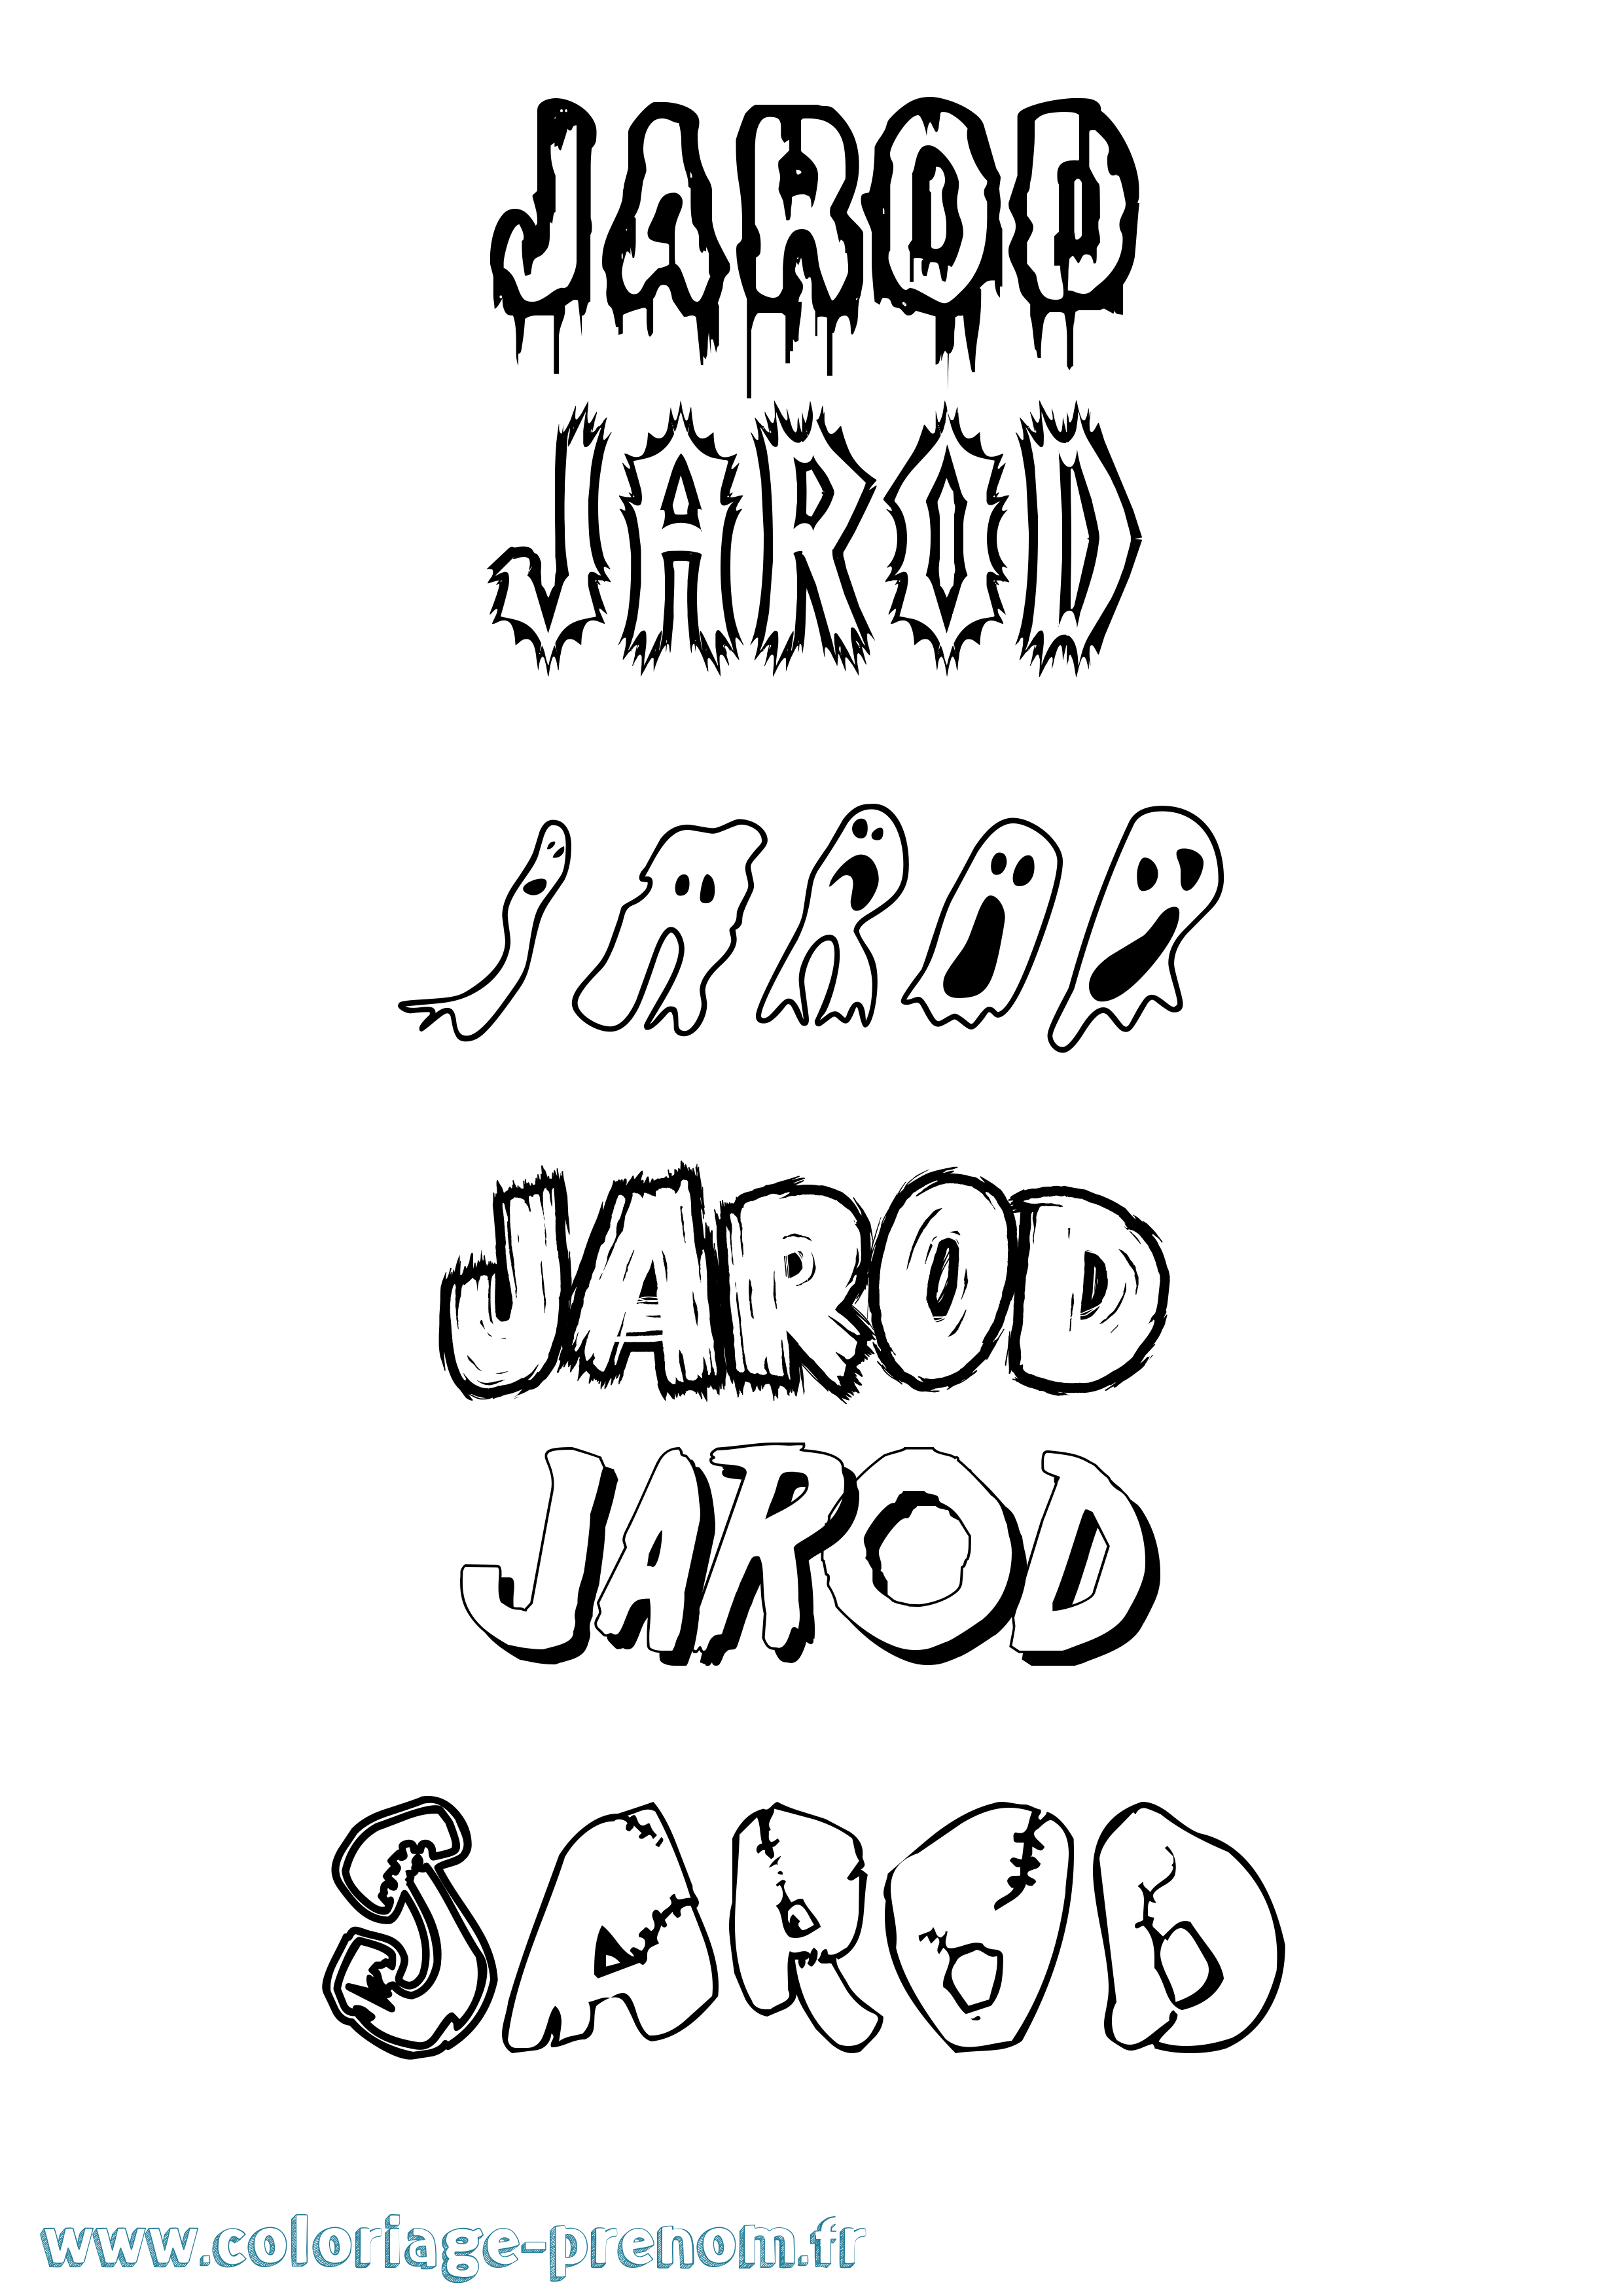 Coloriage prénom Jarod